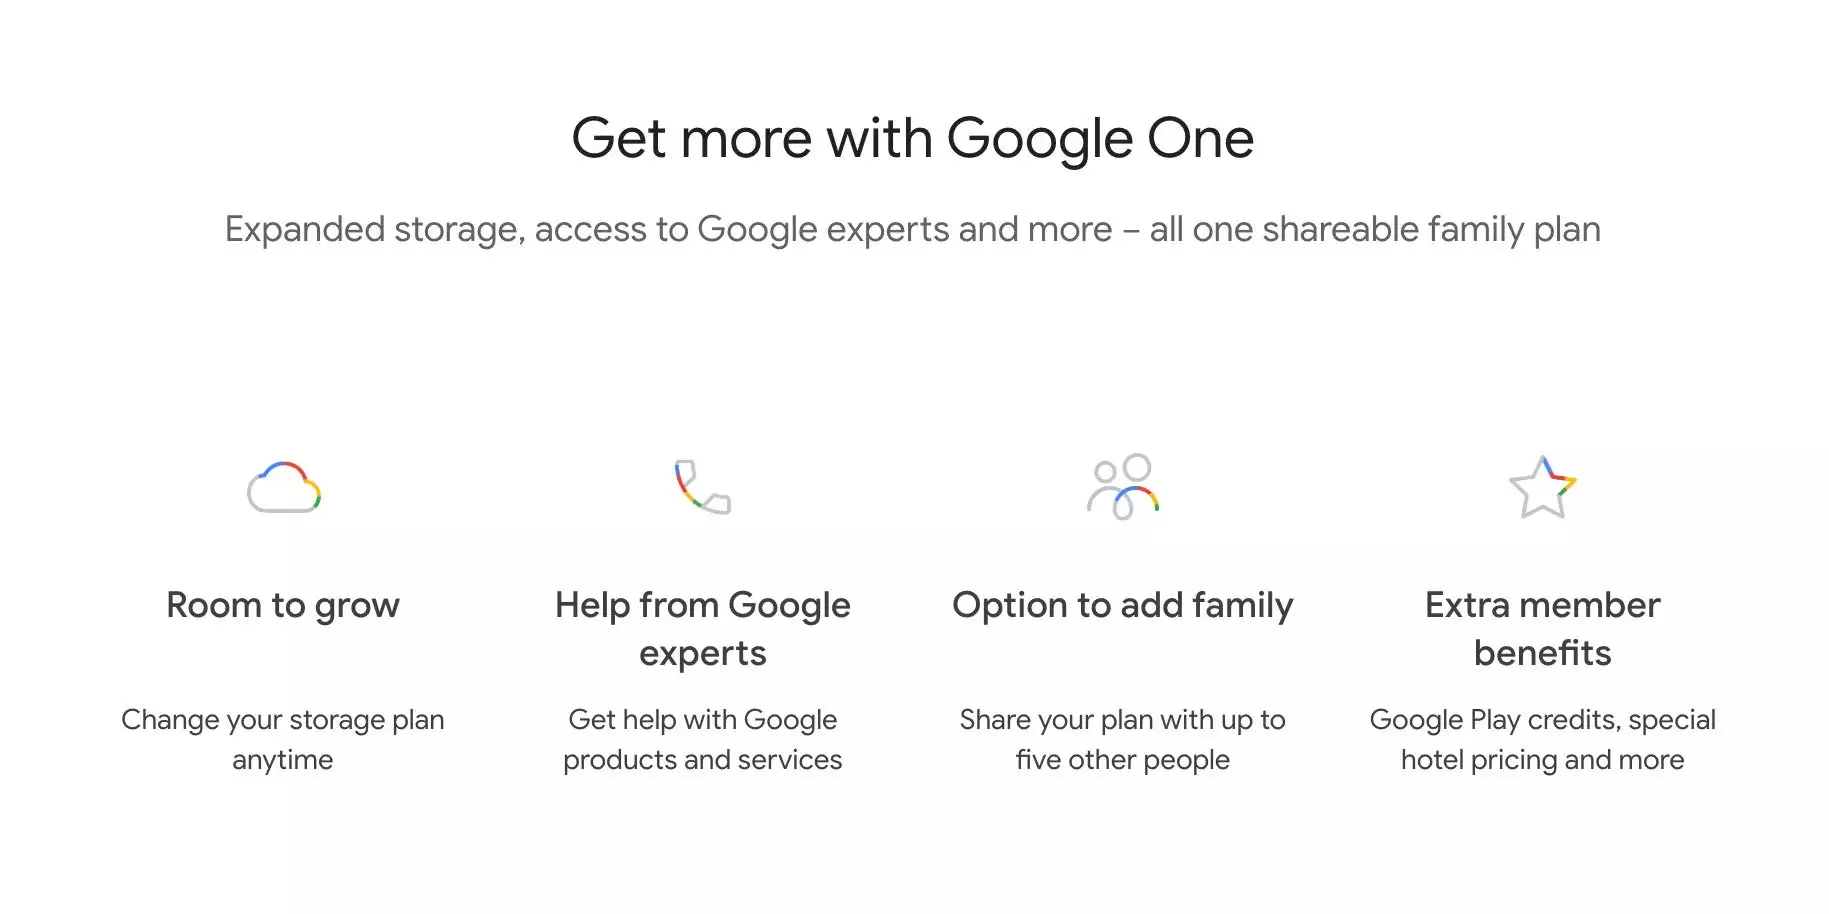 Google One 可让您升级 Google 云端硬盘并获得奖励 - 以下是注册方法